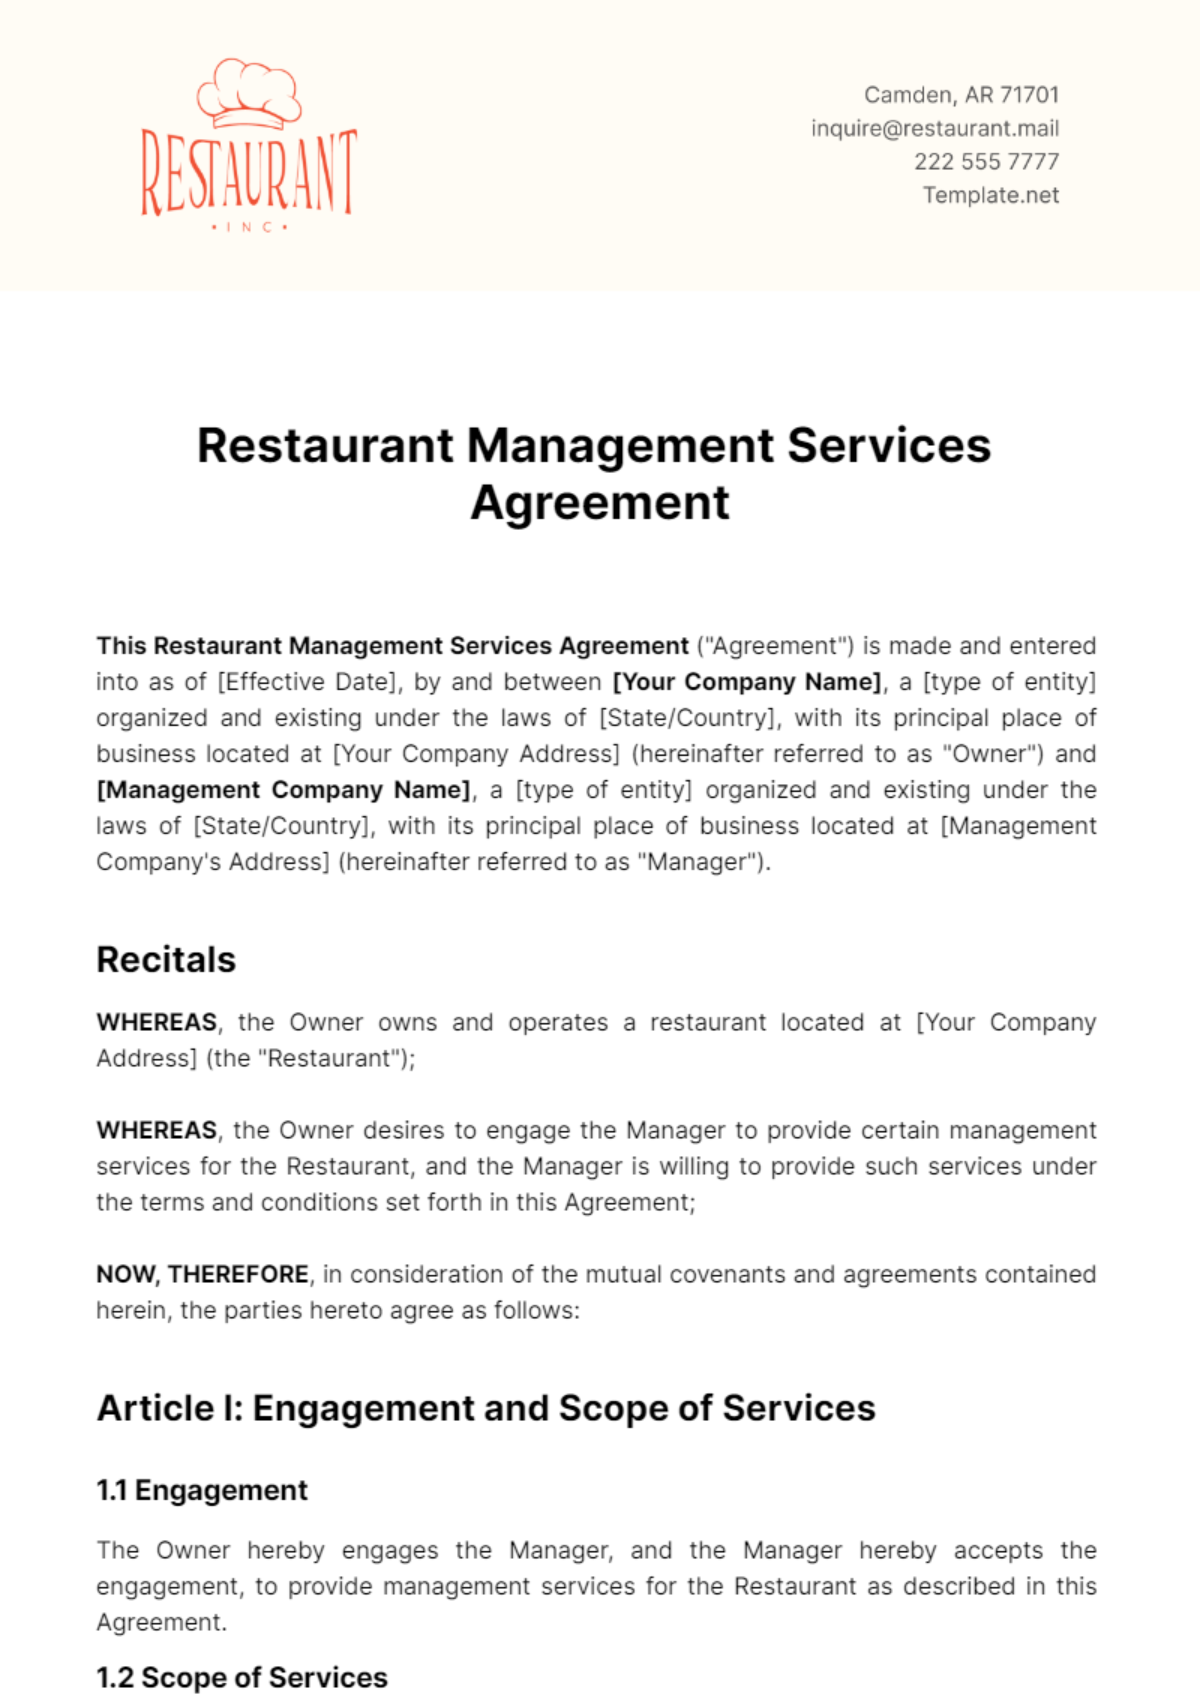 Restaurant Management Services Agreement Template